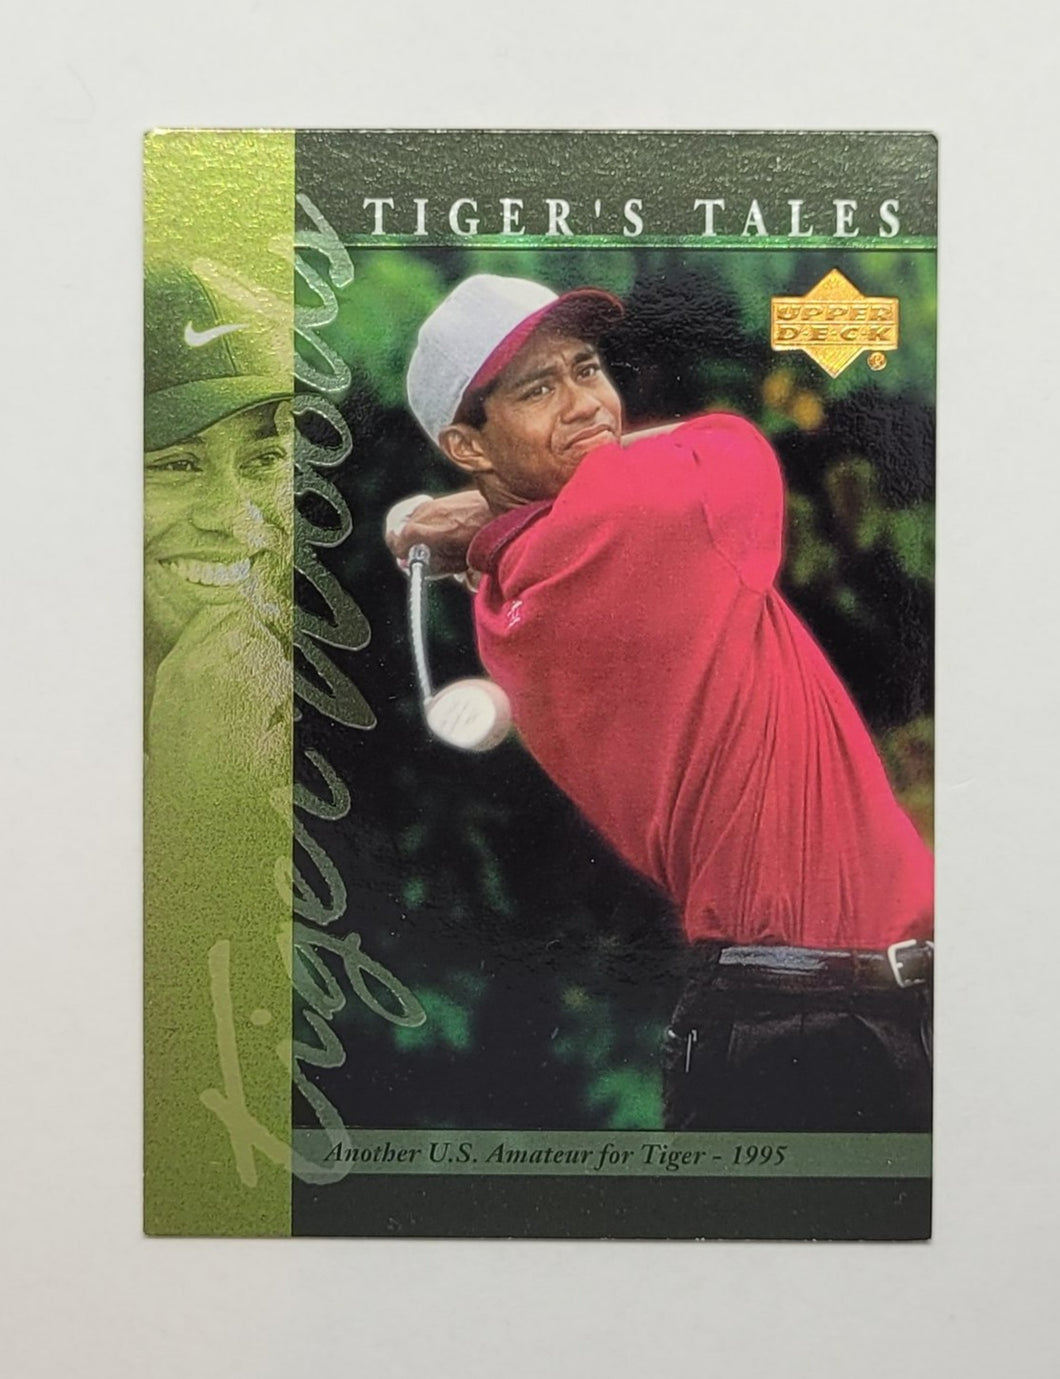 2001 Upper Deck Tiger Woods Golf Card